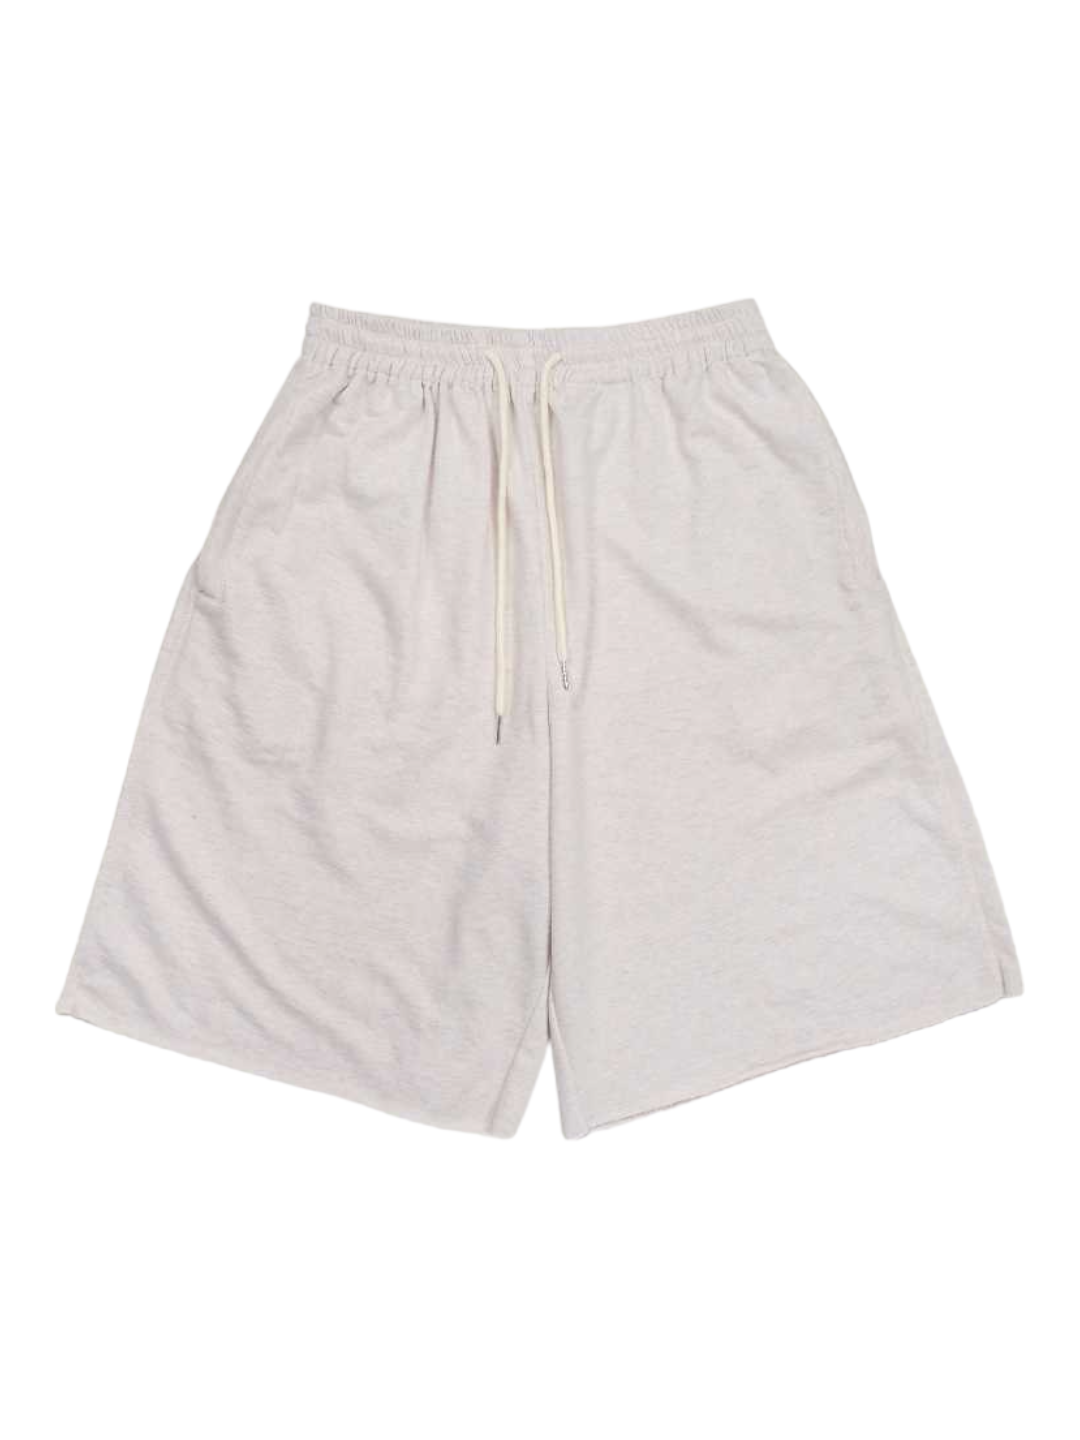 CLUB ✿ 09 Half Sweat Shorts in Light Grey